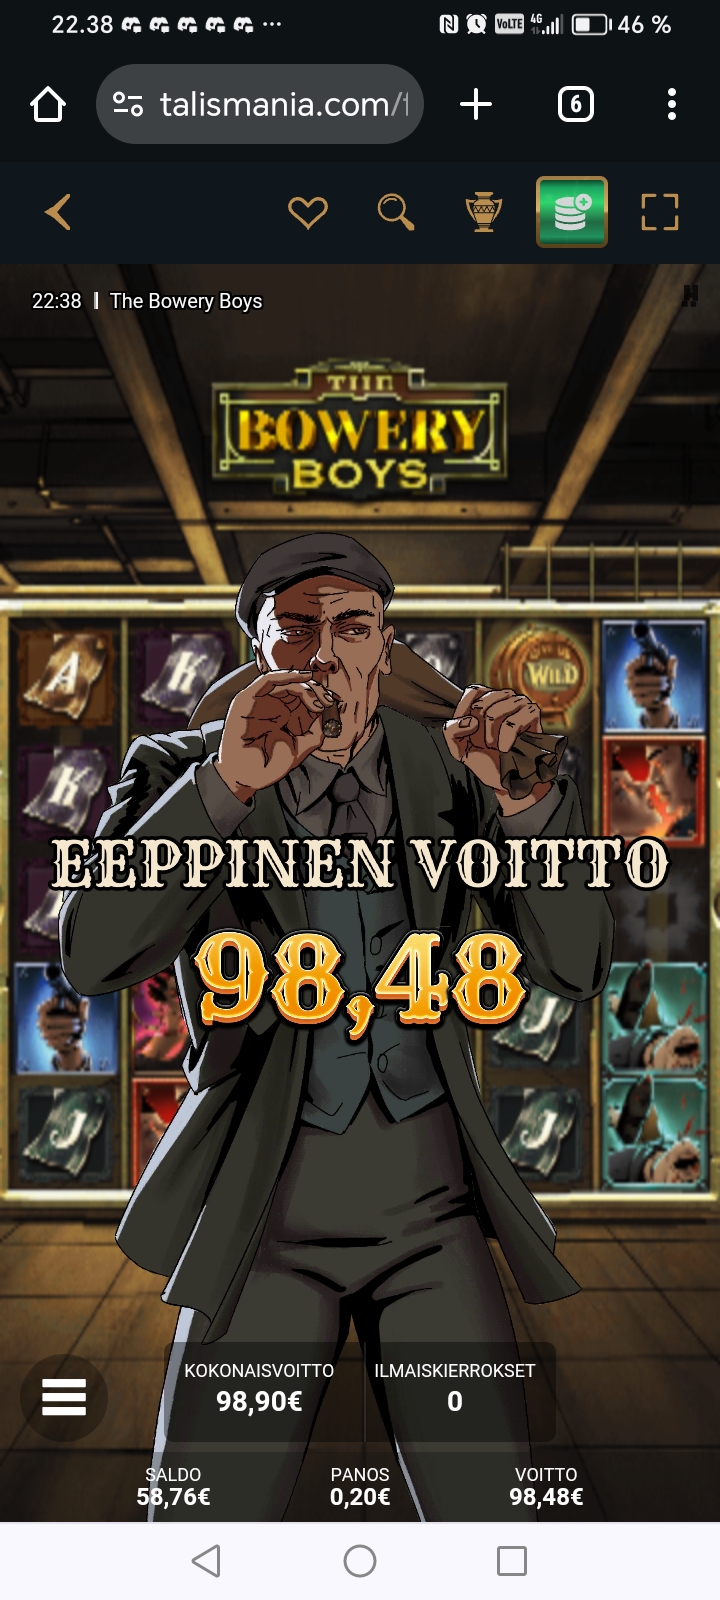 Bowery Boys – Talismania (98.90 eur / 0.20 bet) | Nimismies.